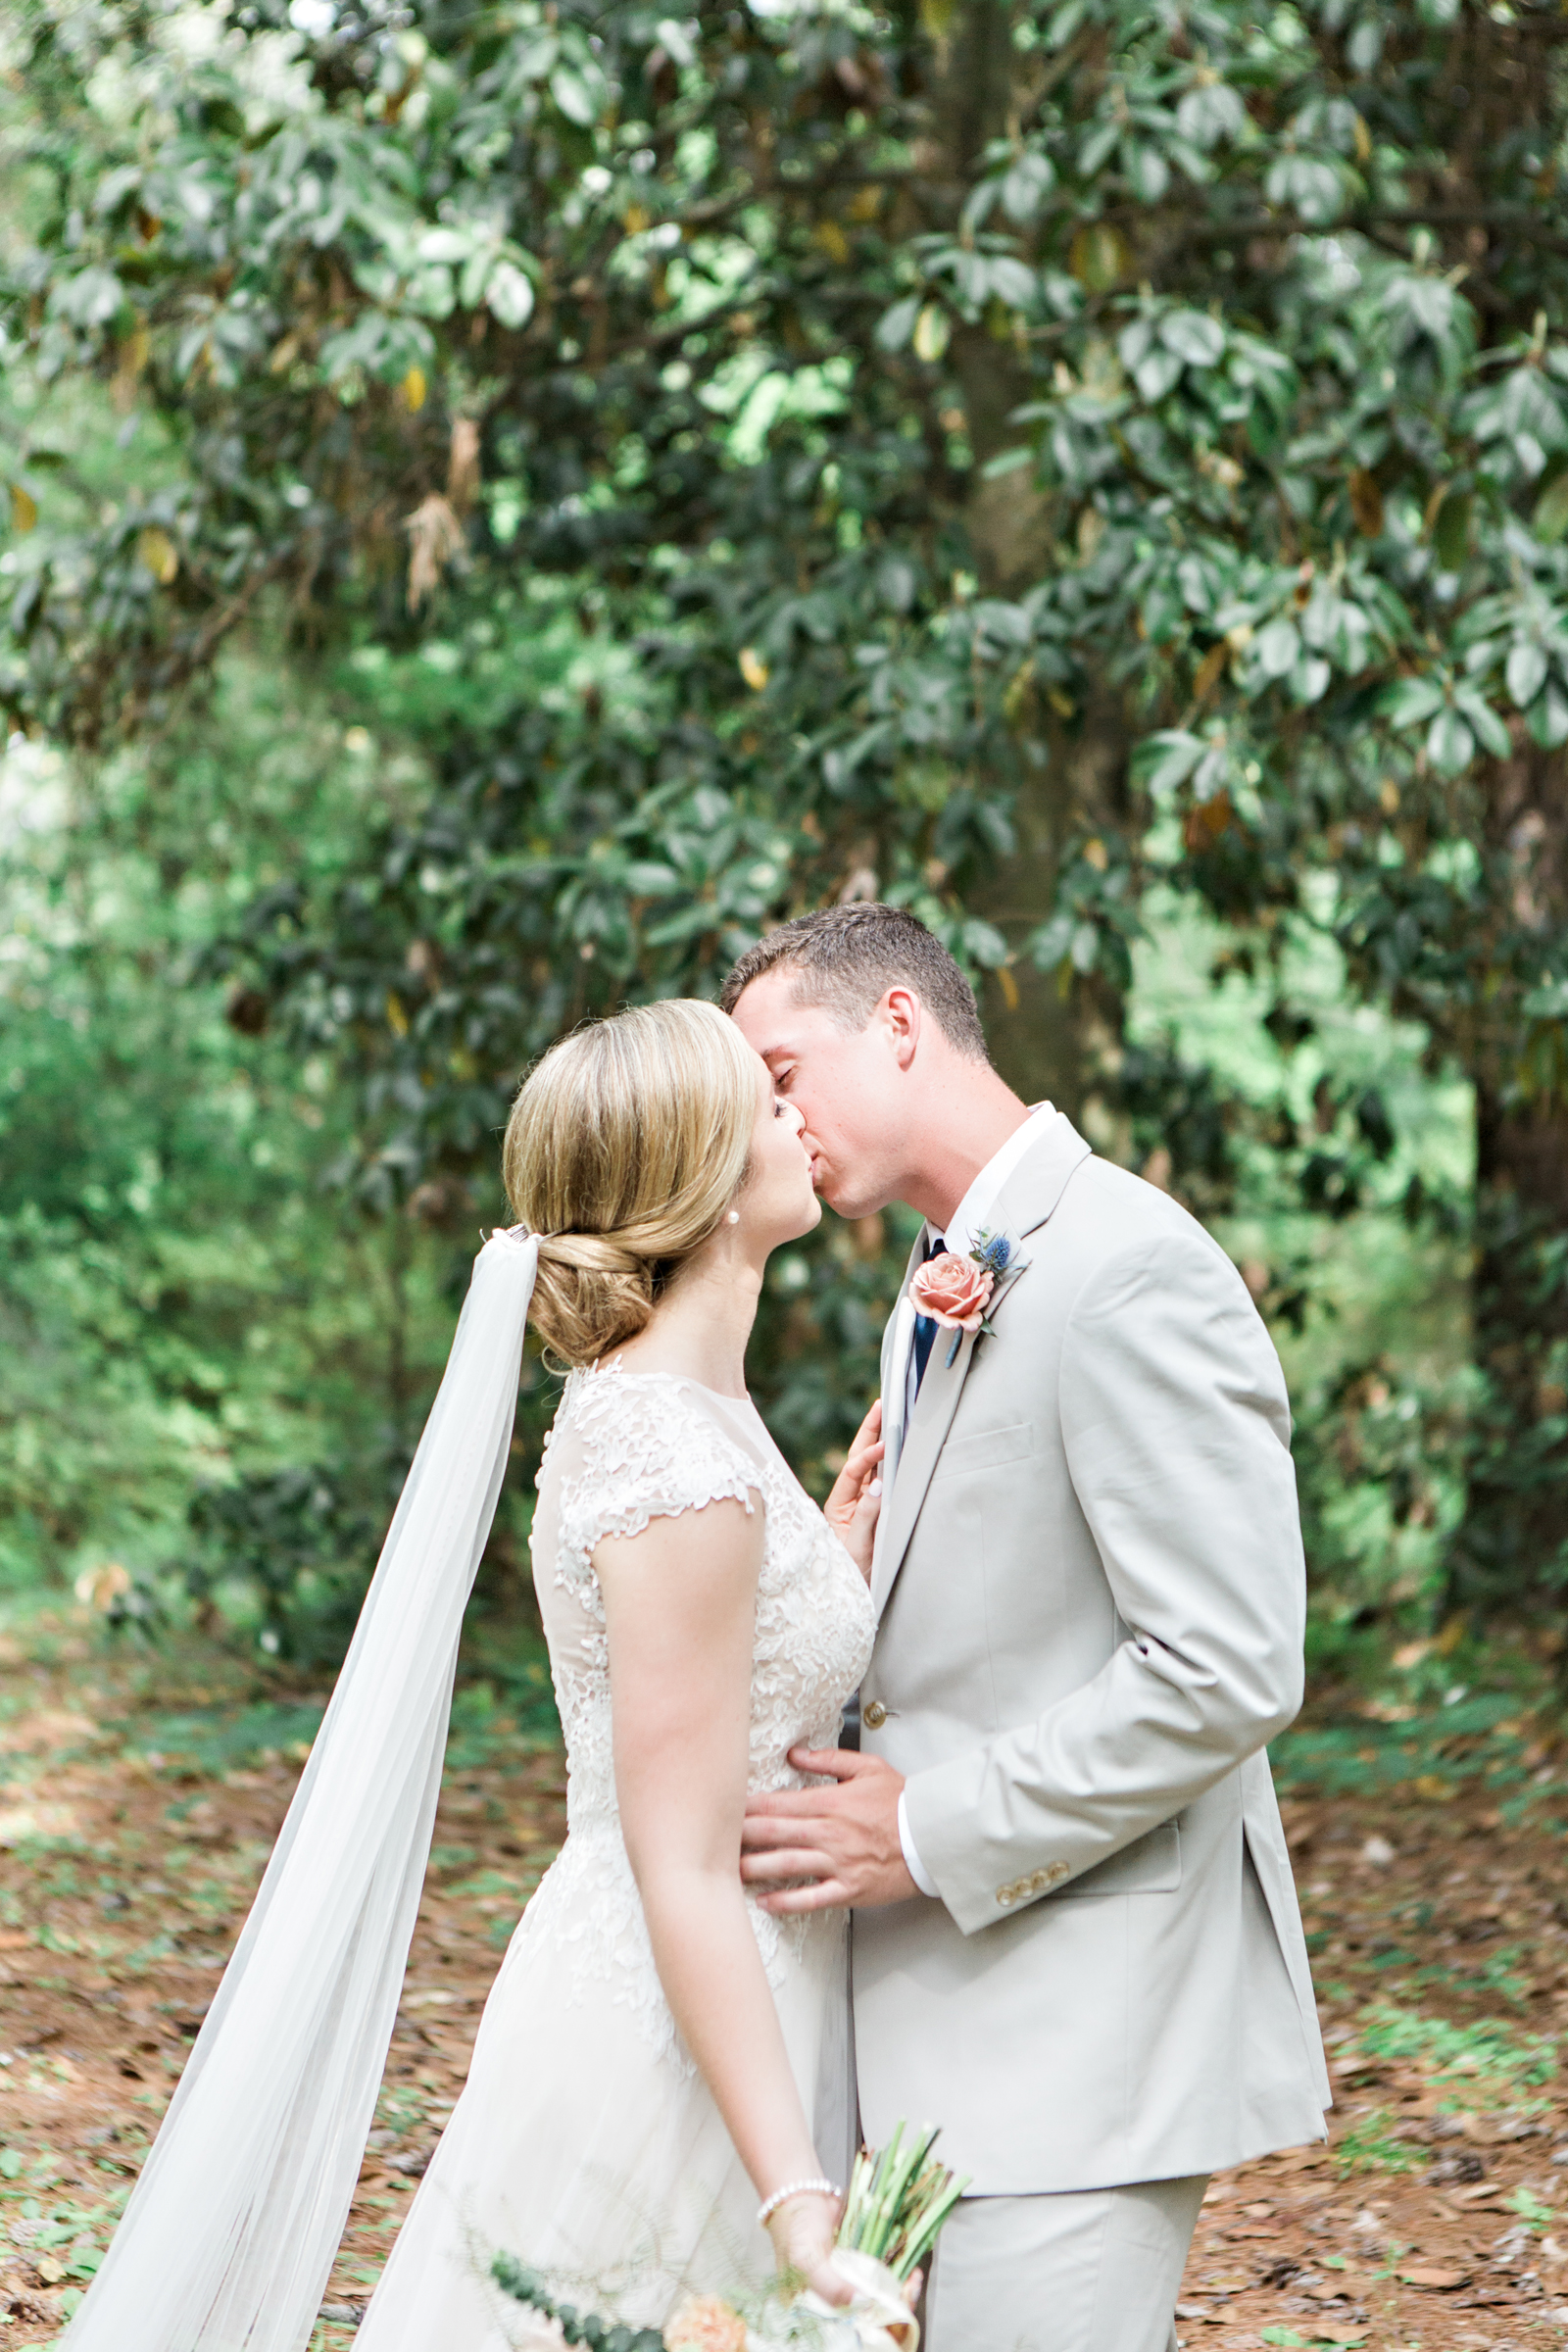 Matty-Drollette-Photography-Alabama-Weddings-Sara and Logan-121.jpg